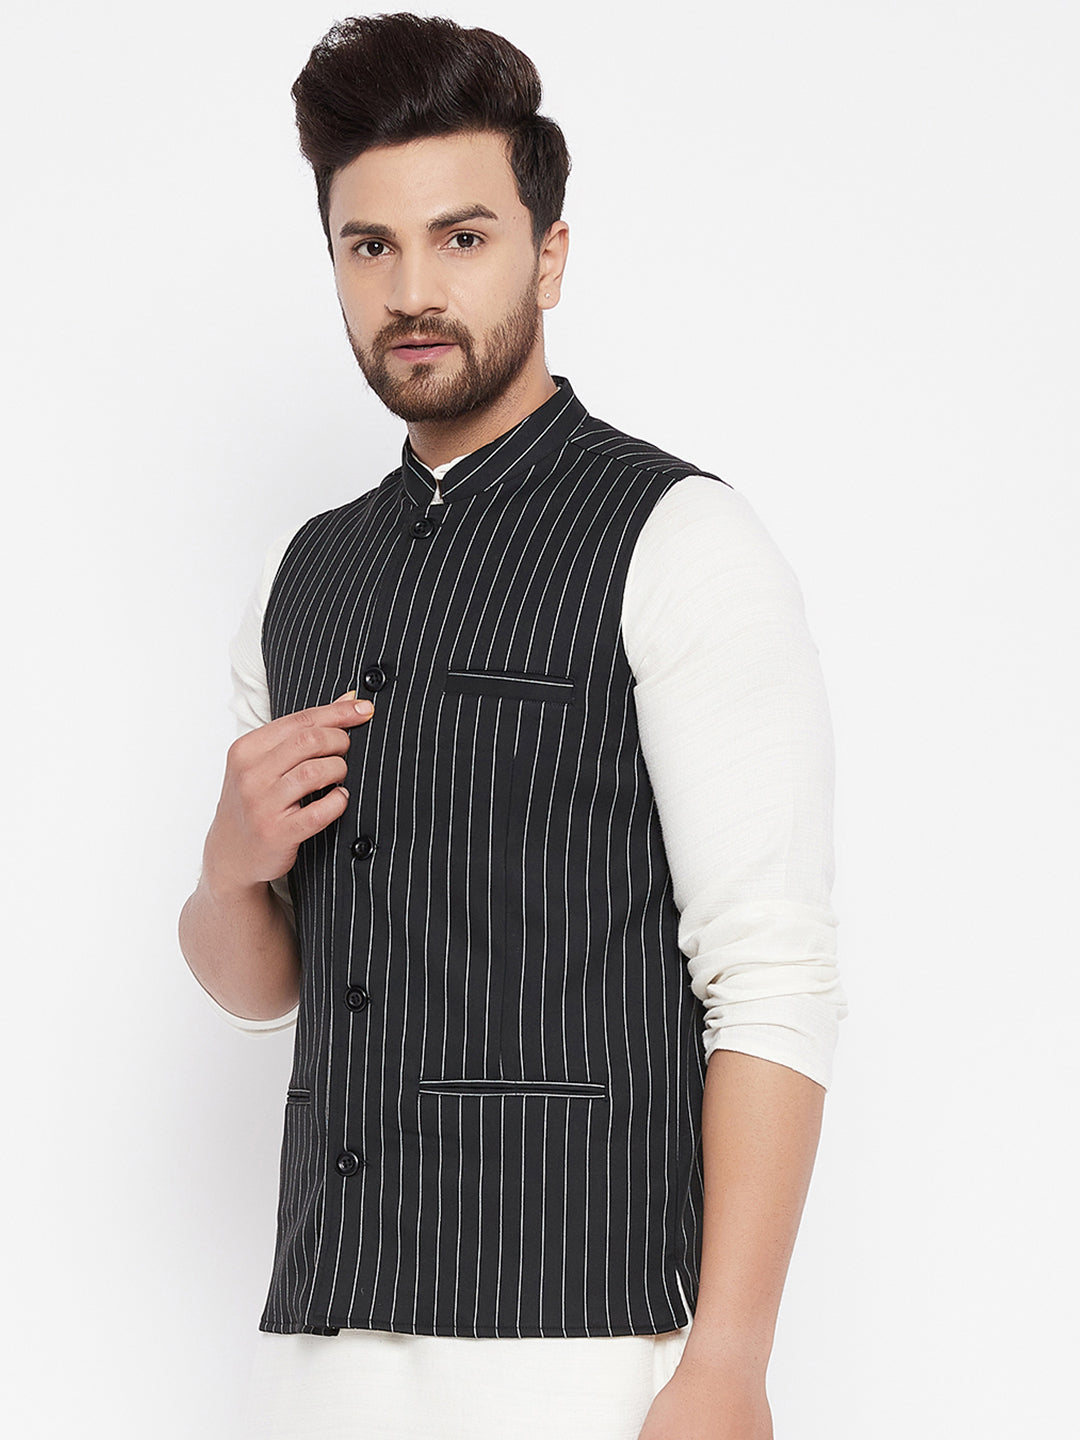 Men's Woven Design Jacket - Even Apparels